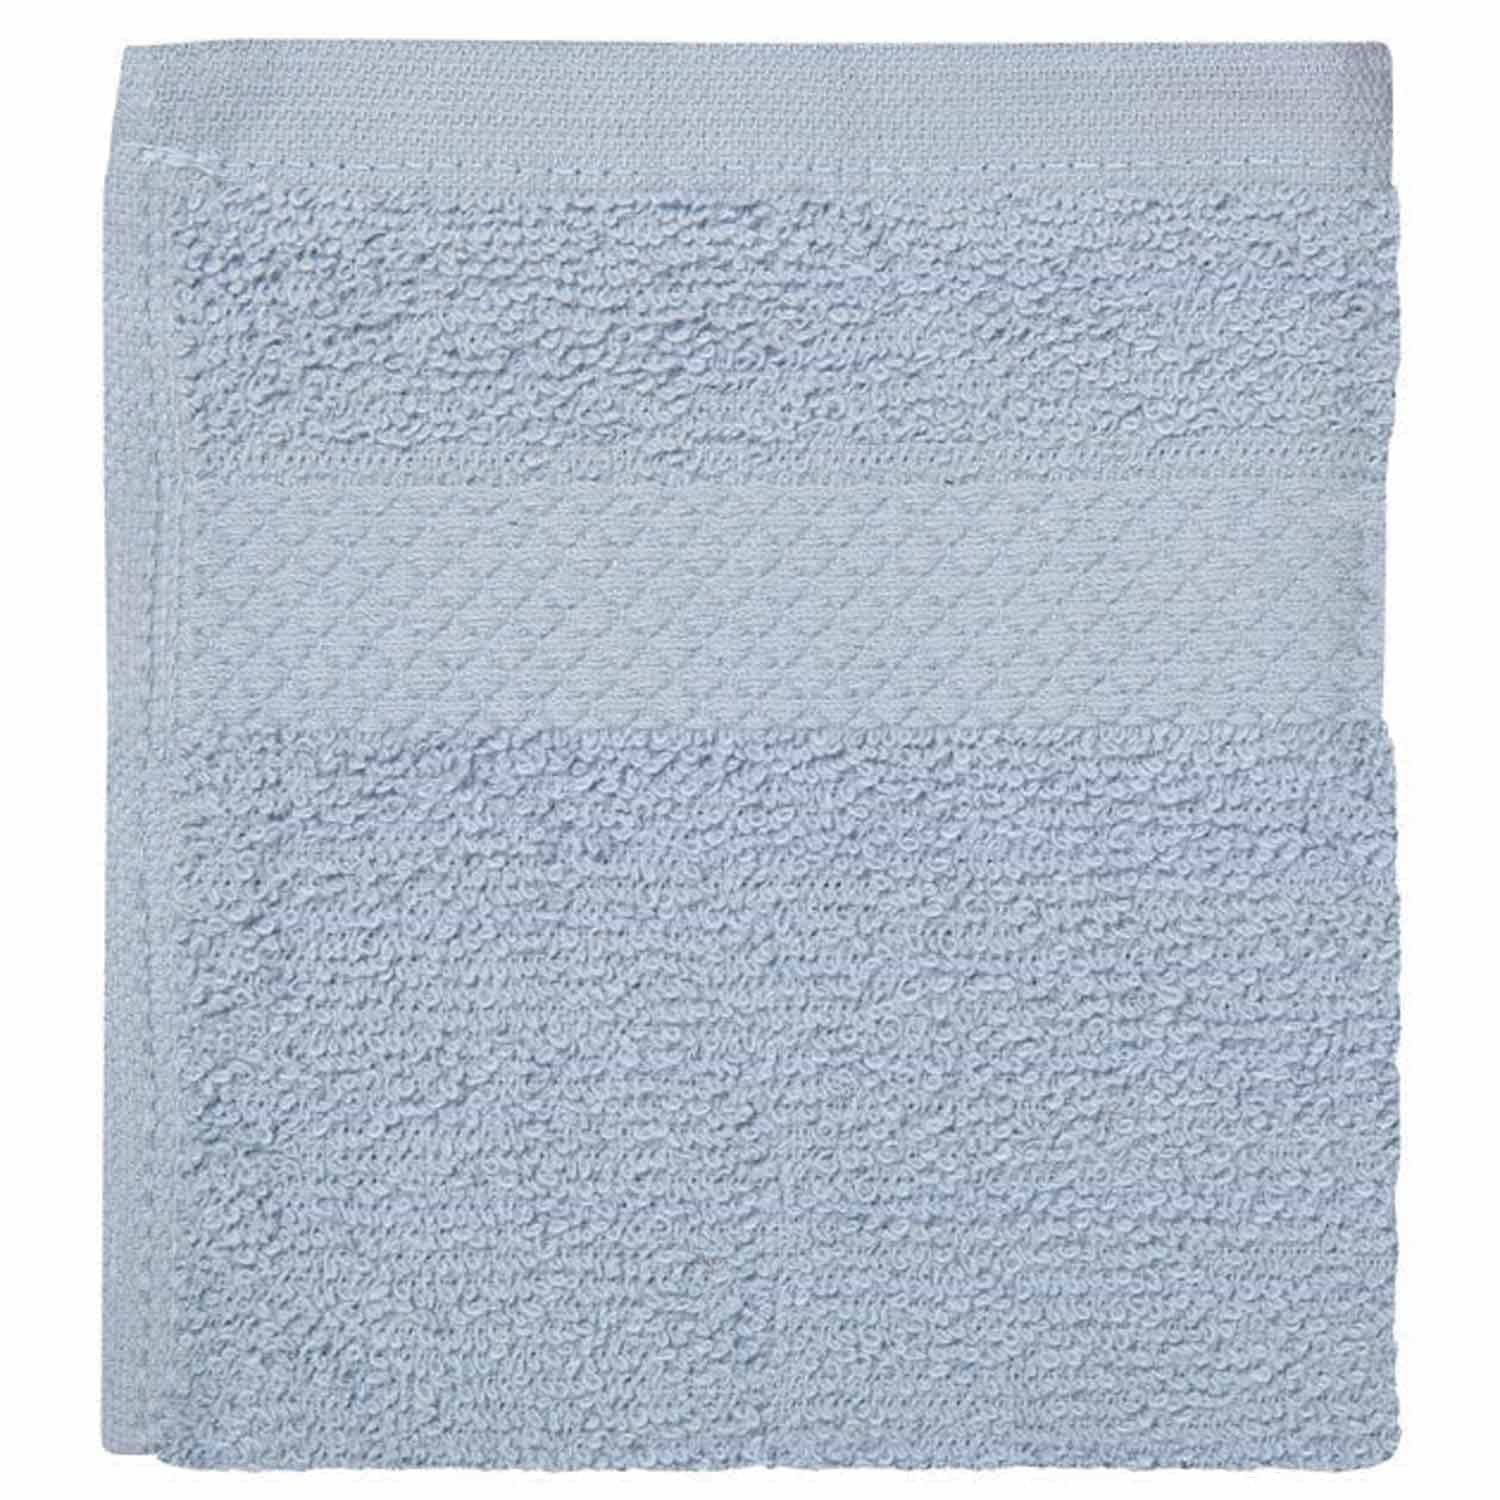 American Dawn | 12X12 Inch Blue With Single Cam Healthcare Towel | Wash Cloth